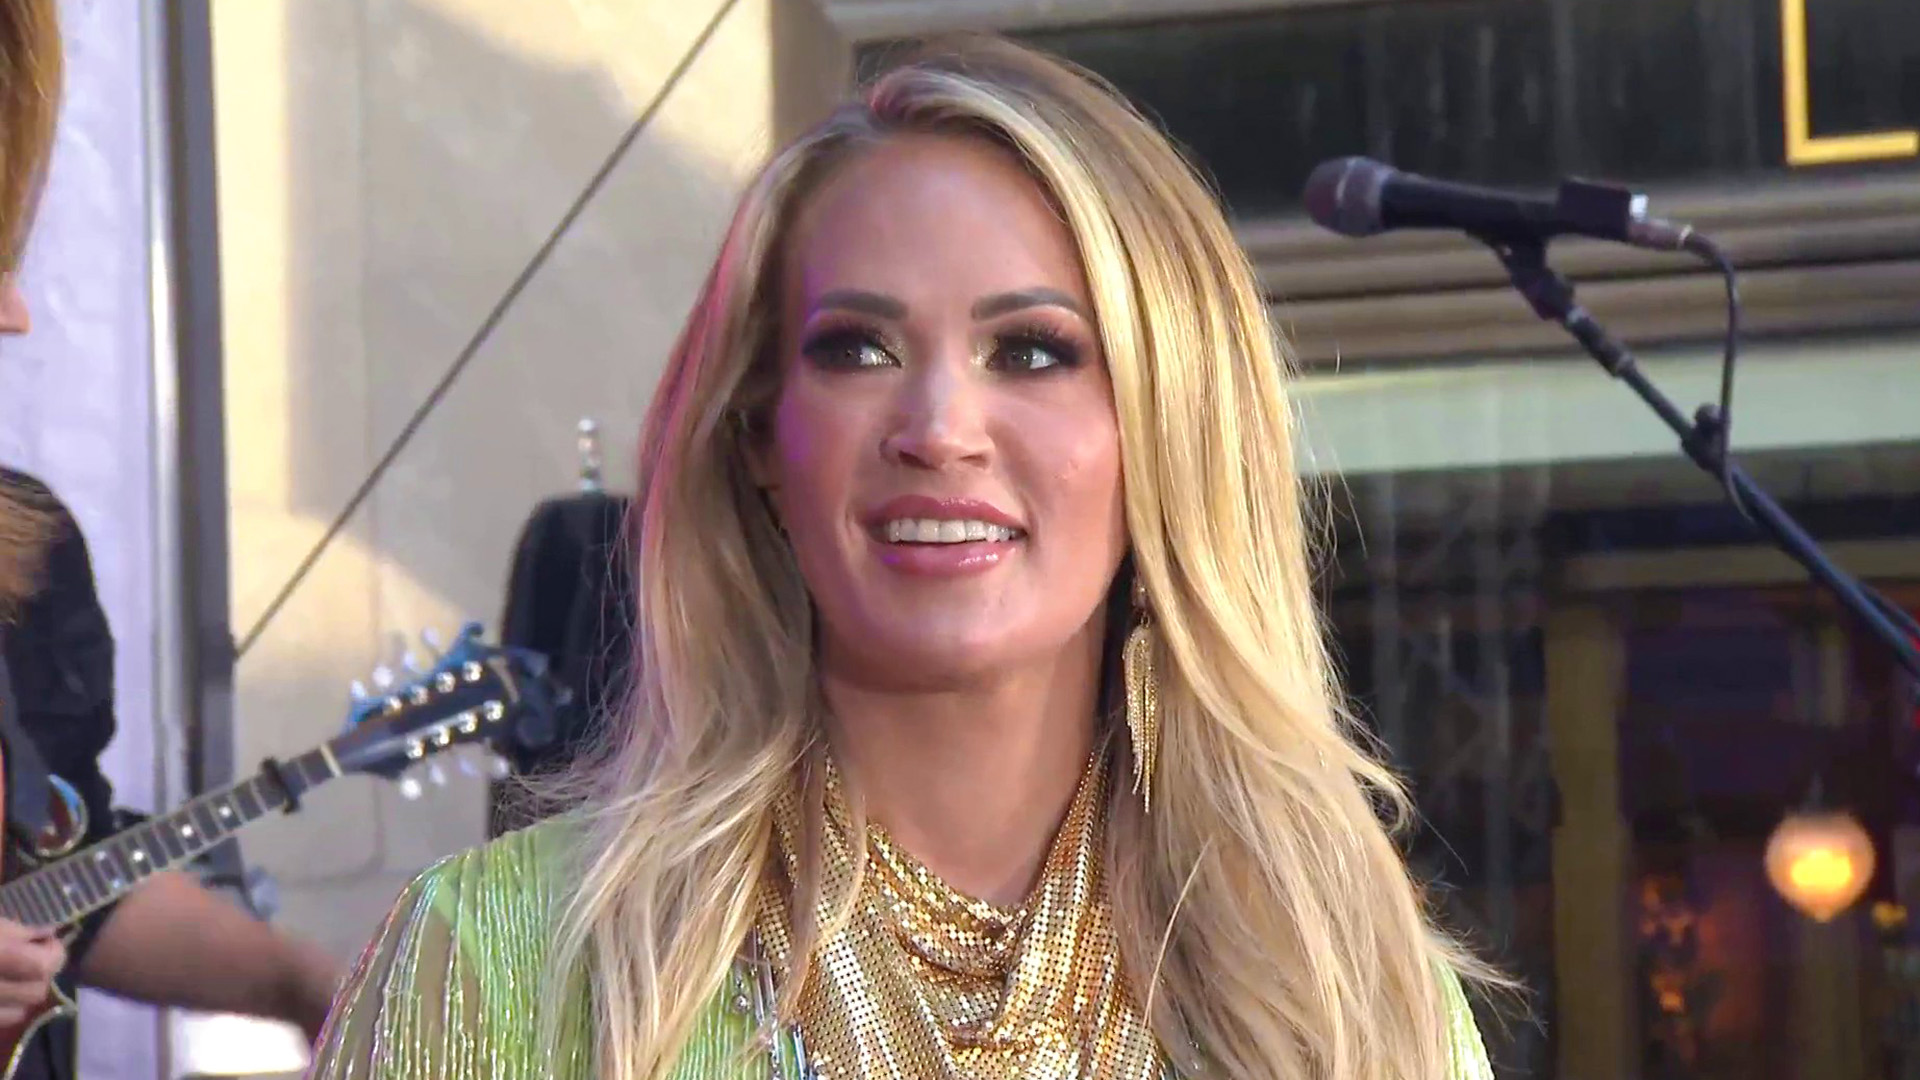 Carrie Underwood talks deluxe album, helping emergency workers